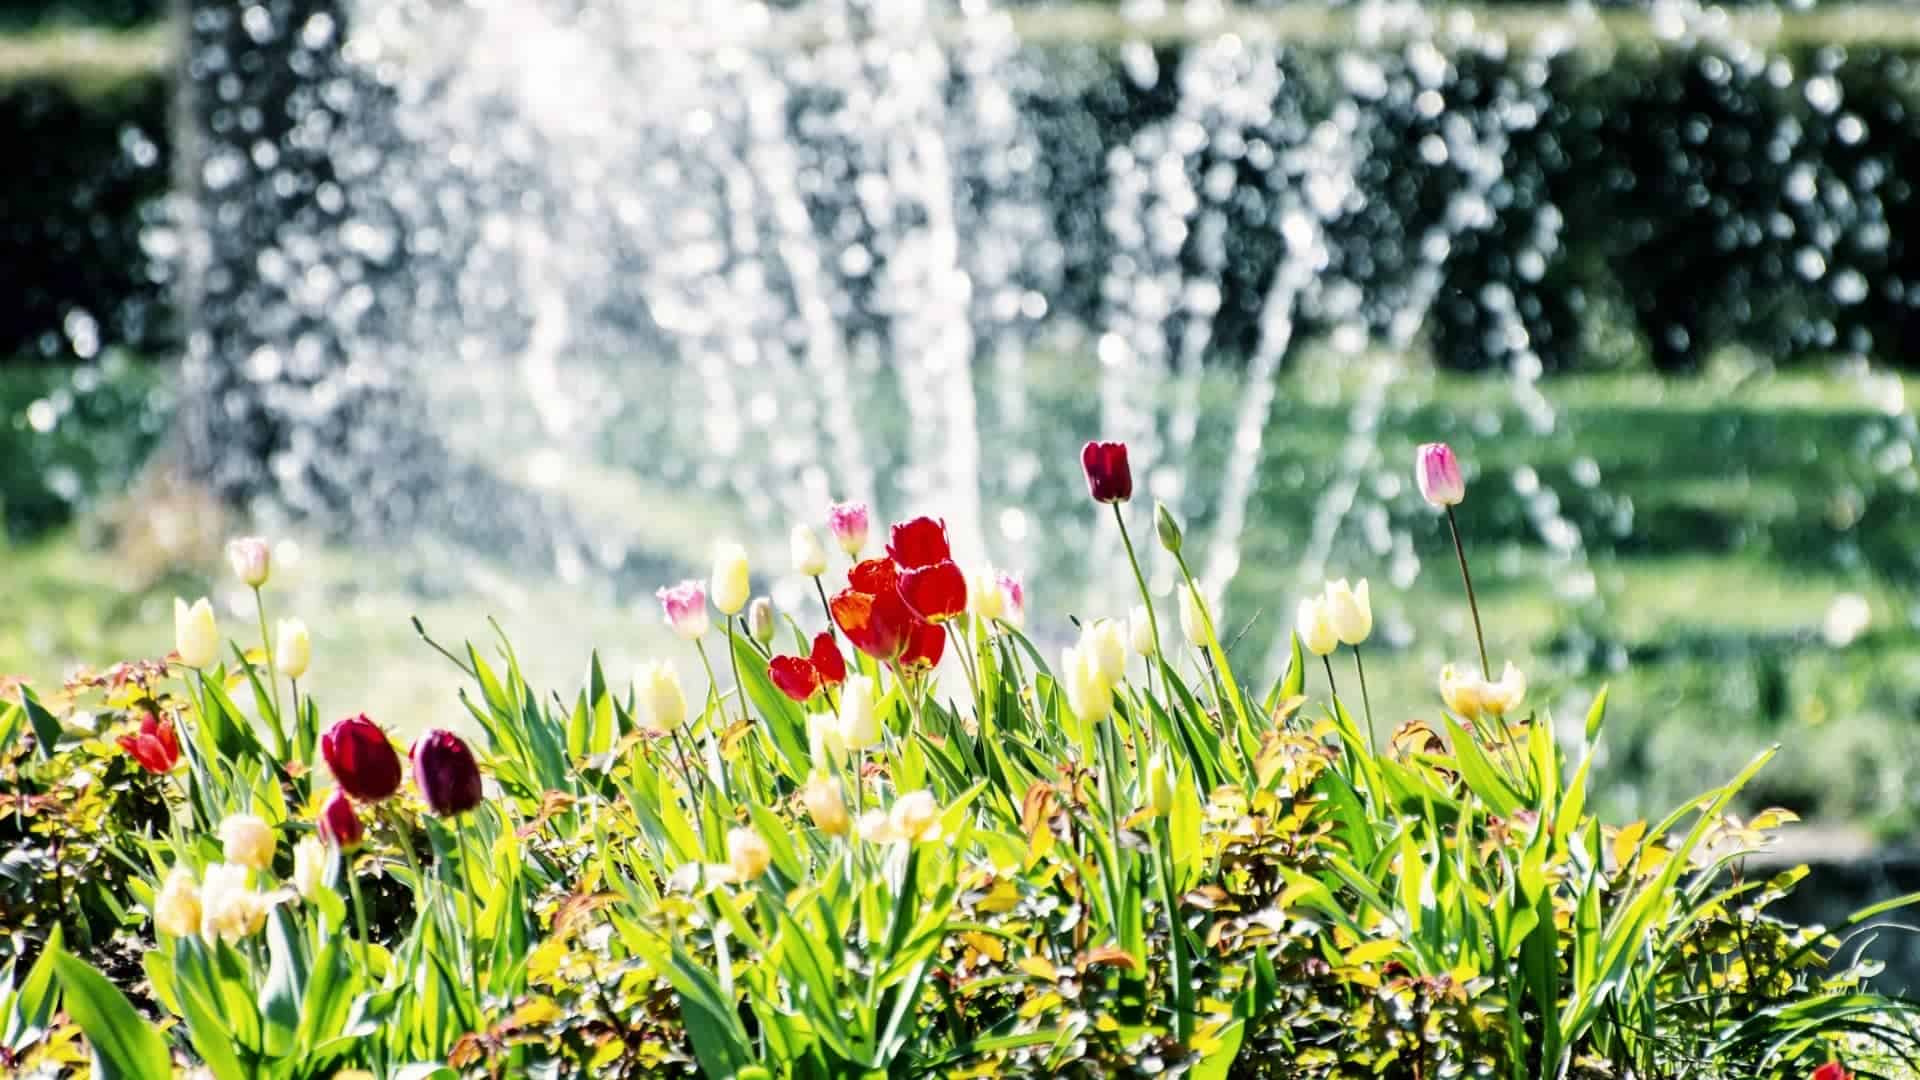 Garden Water Filter